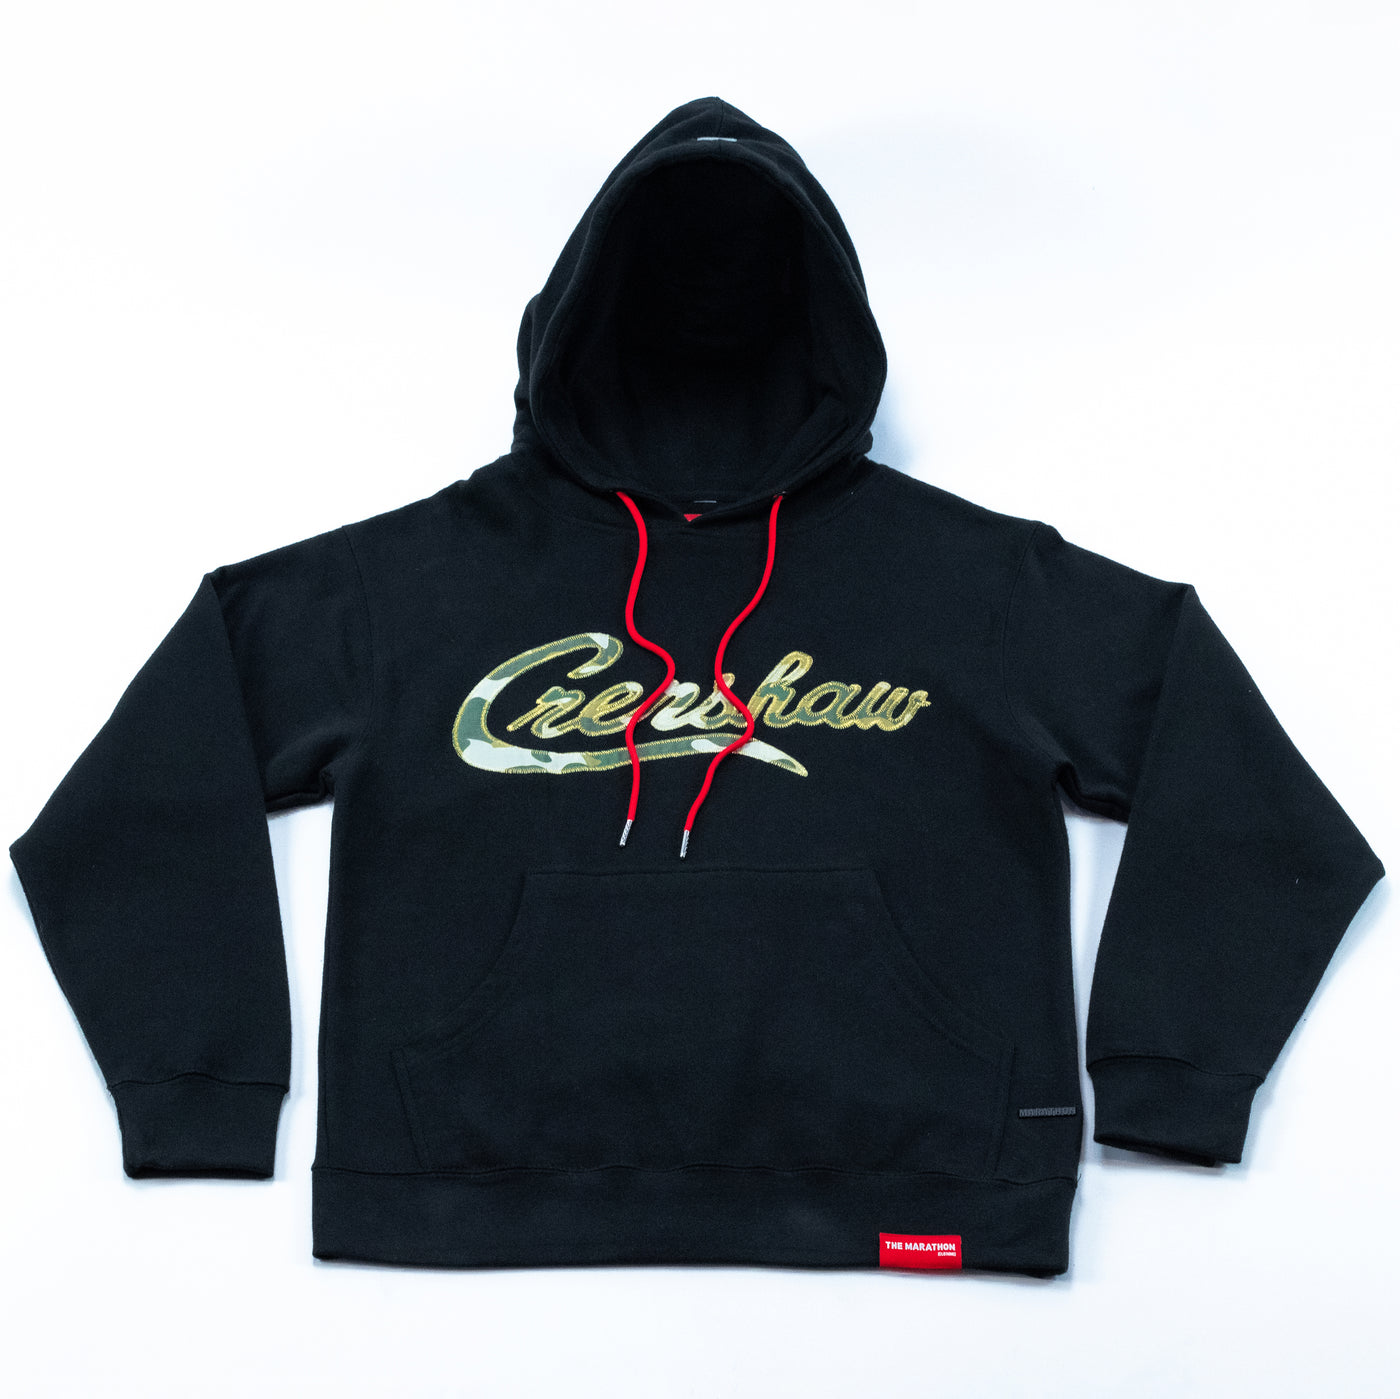 Crenshaw Limited Edition Hoodie - Black/Camo